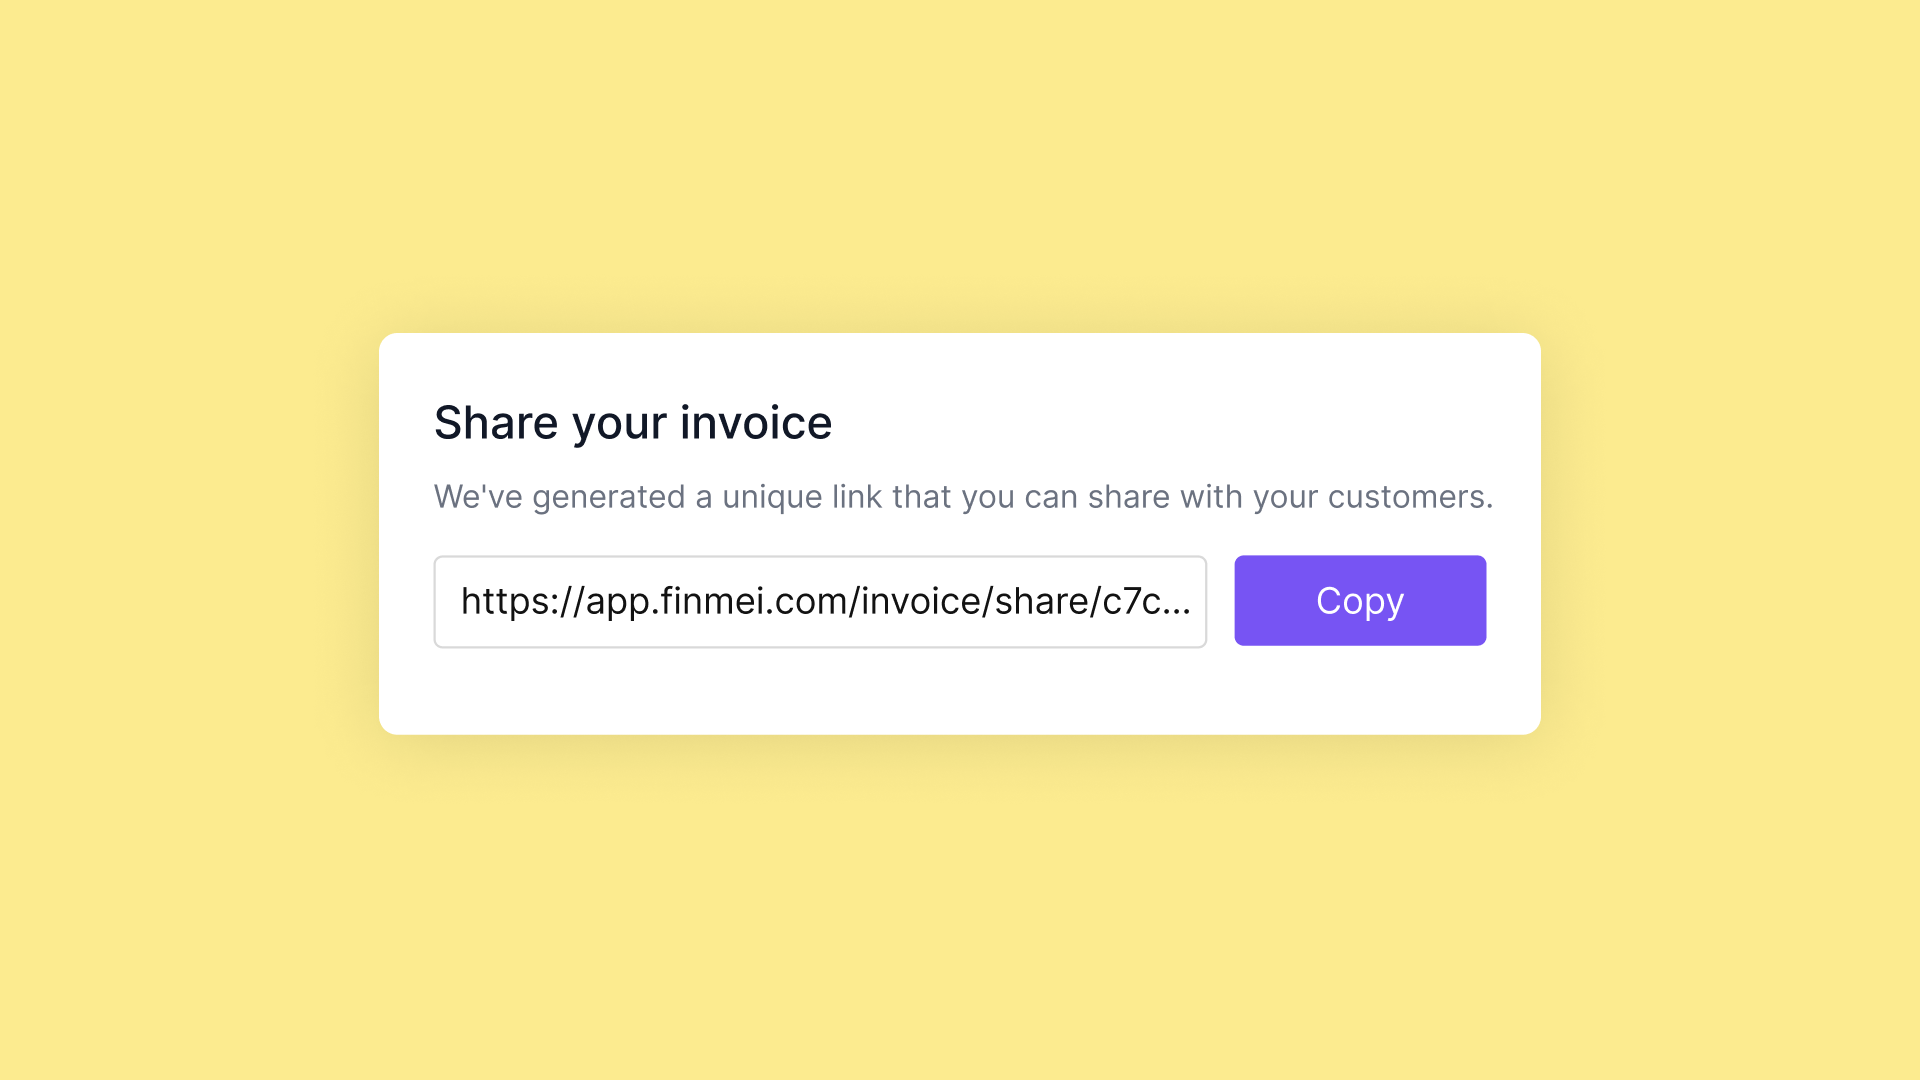 Invoice Sharing